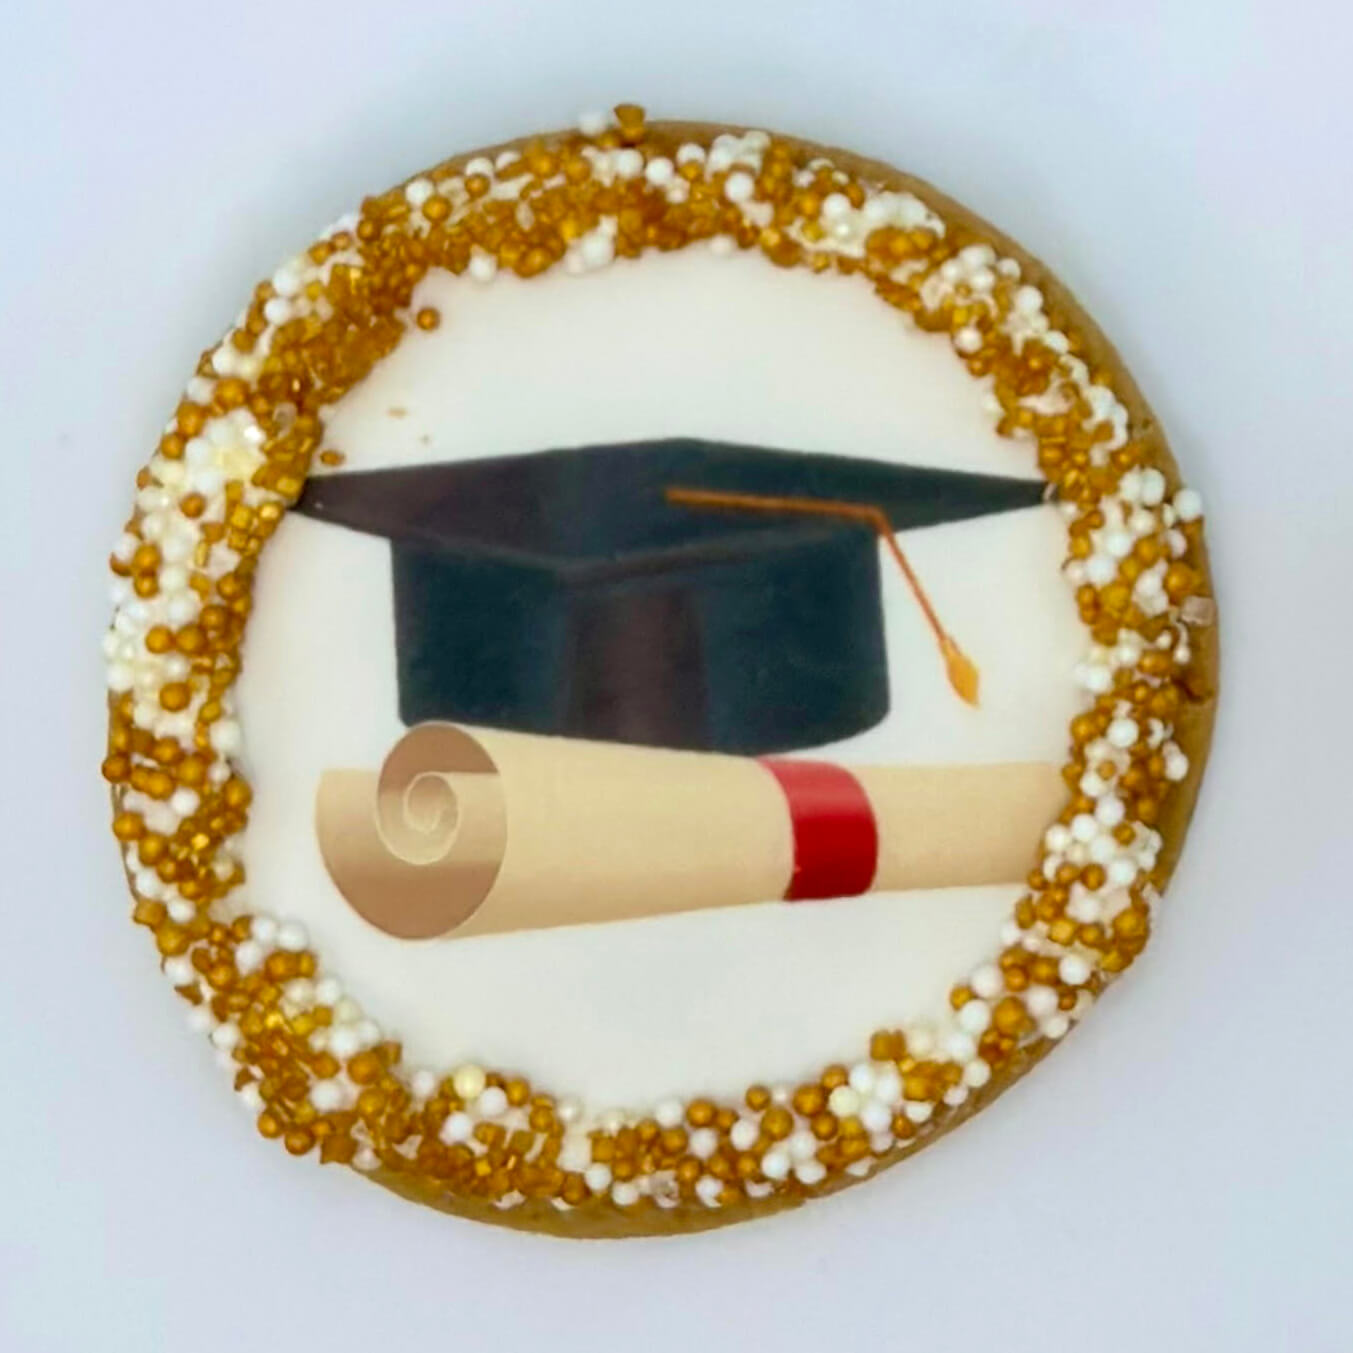 Gluten-Free Nut-Free Graduation Cookies